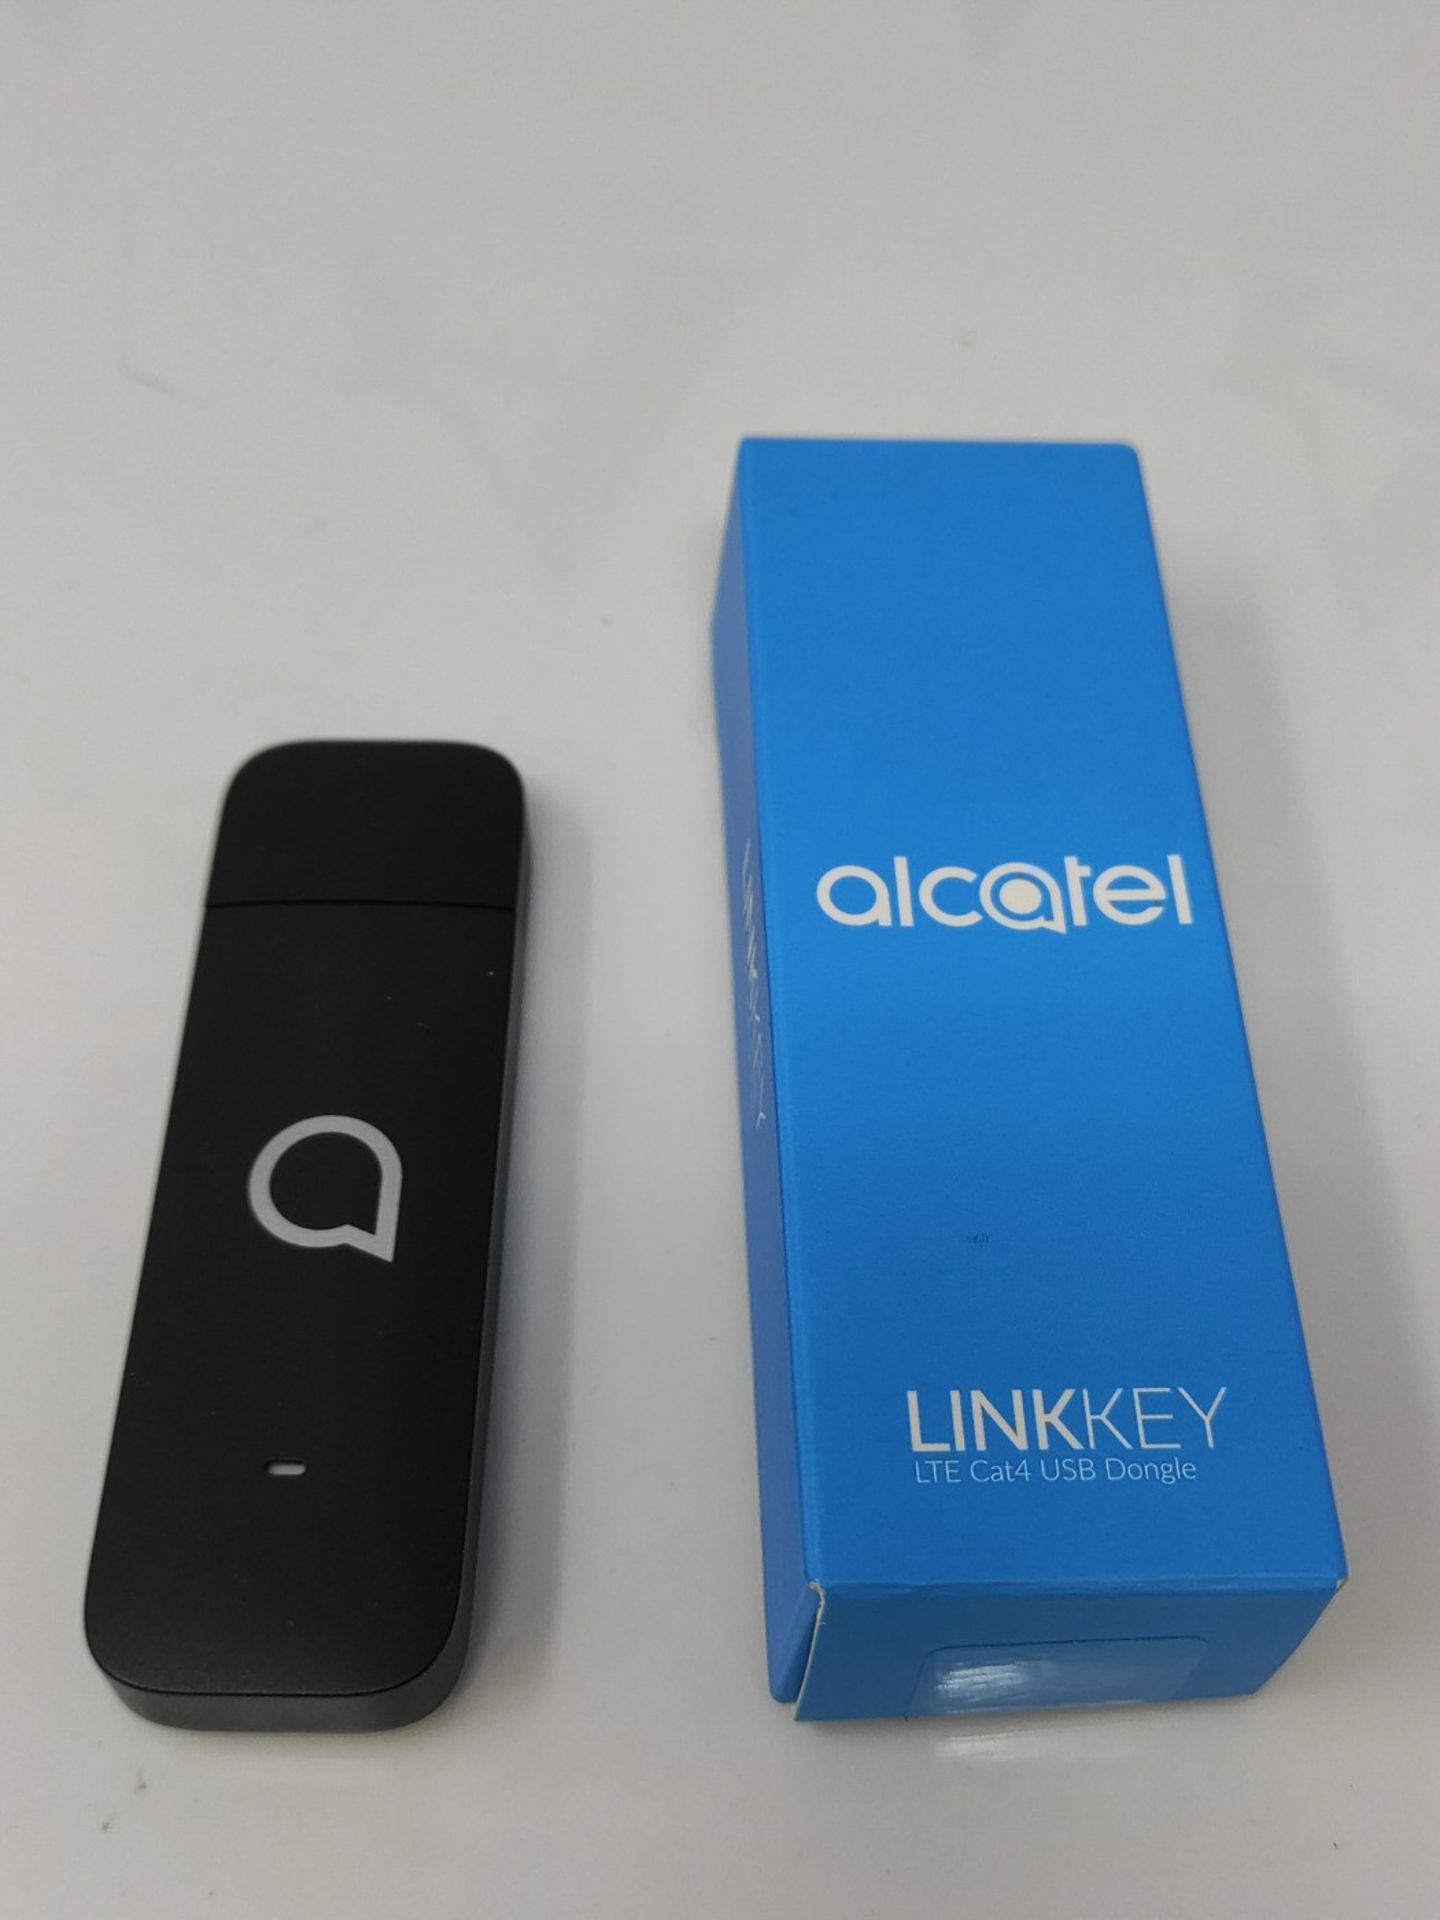 RRP £51.00 Alcatel Link Key - IK41VE1 USB Internet 4G Key, LTE (CAT.4), status LED, Black [Italy] - Image 2 of 2